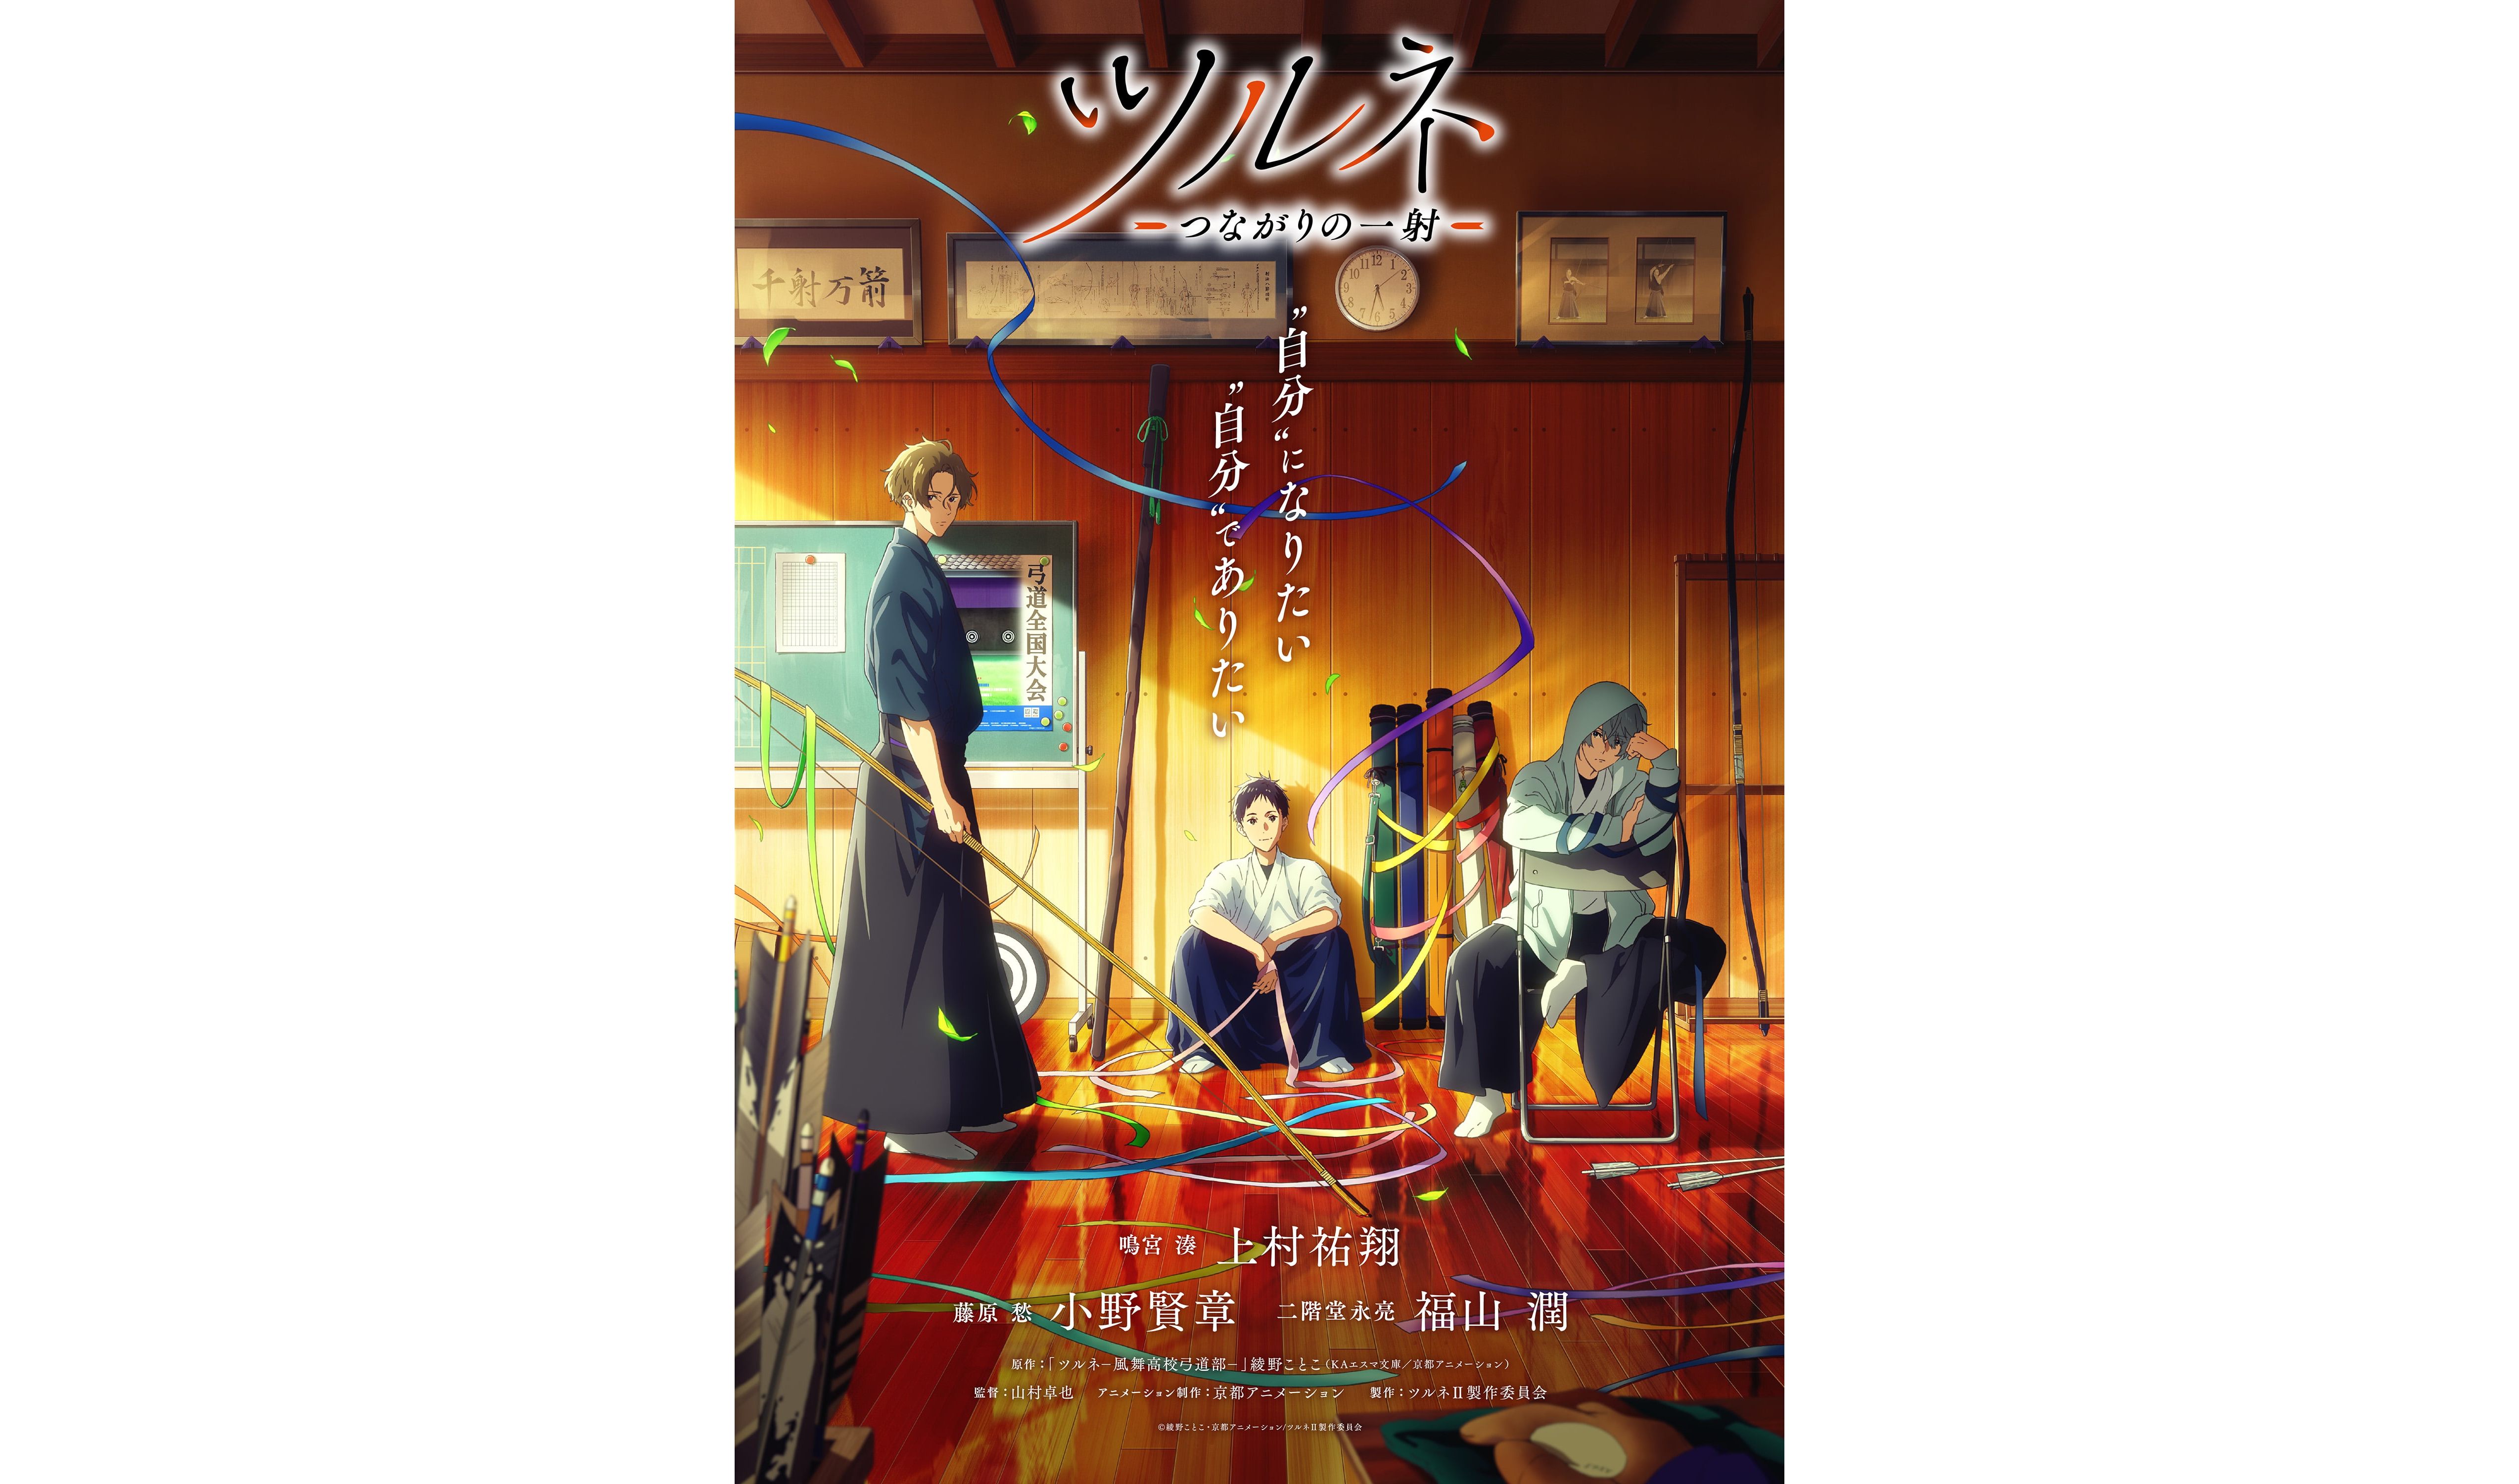 Tsurune Season 2 Teases January Premiere in New Promo